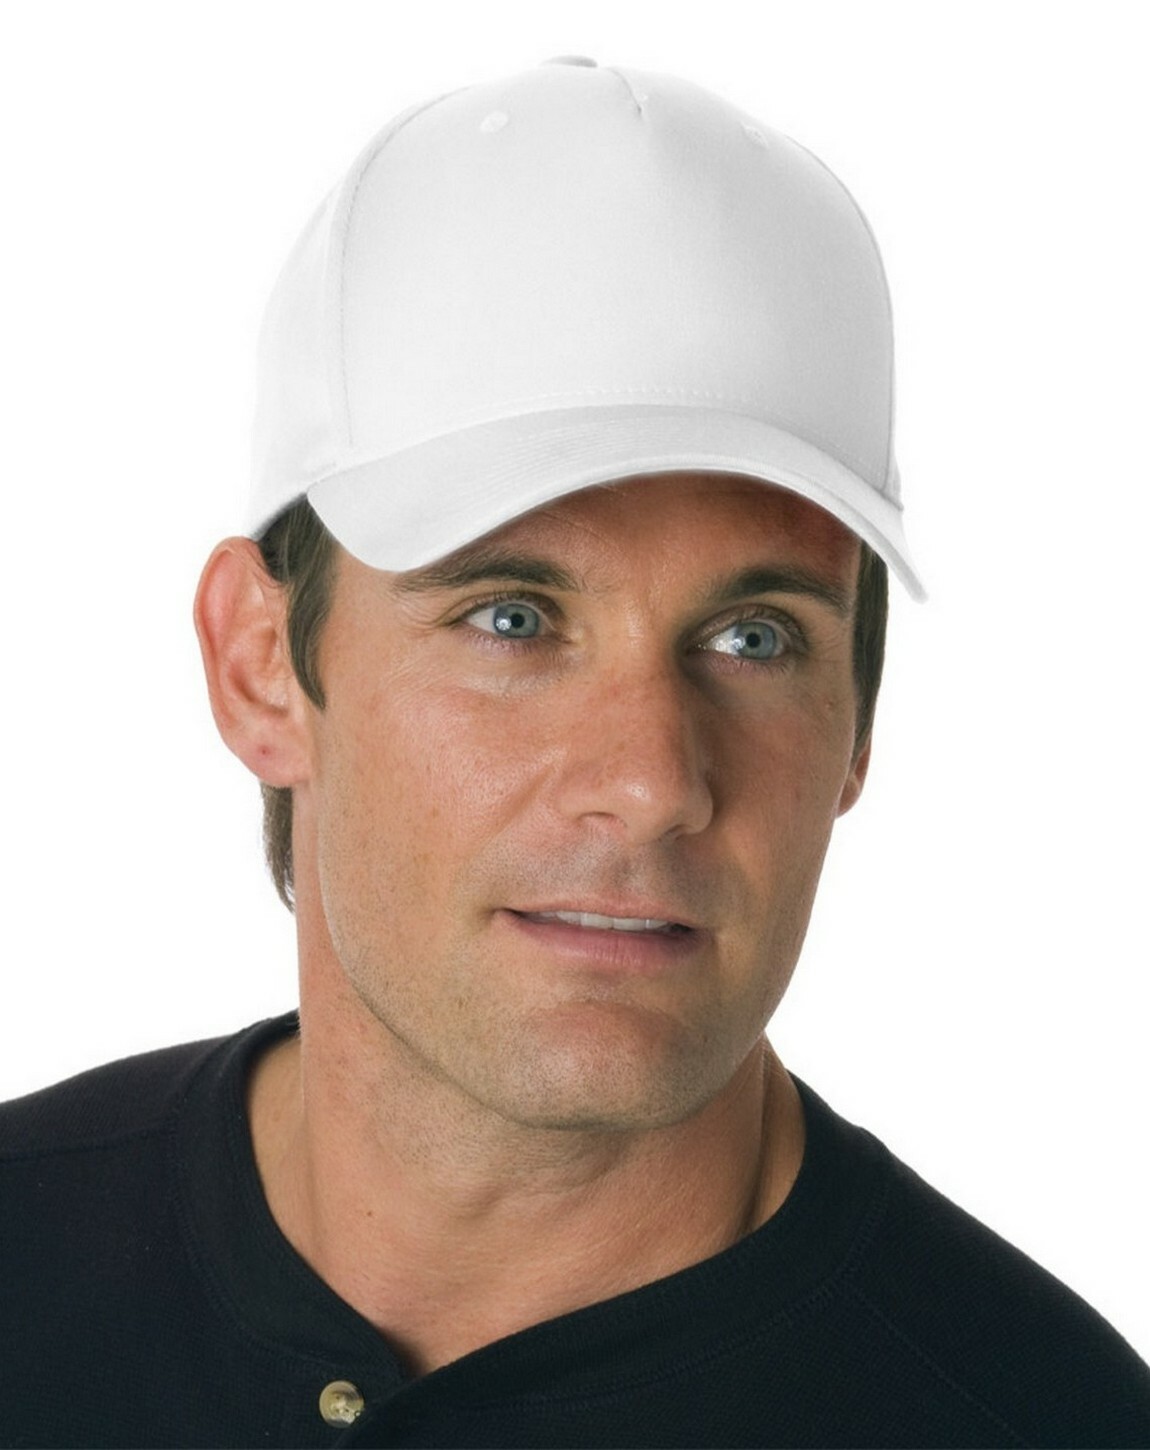 Flexfit 6560 5 Panel Flex Fit Hat | Buy Blank or Print Logo